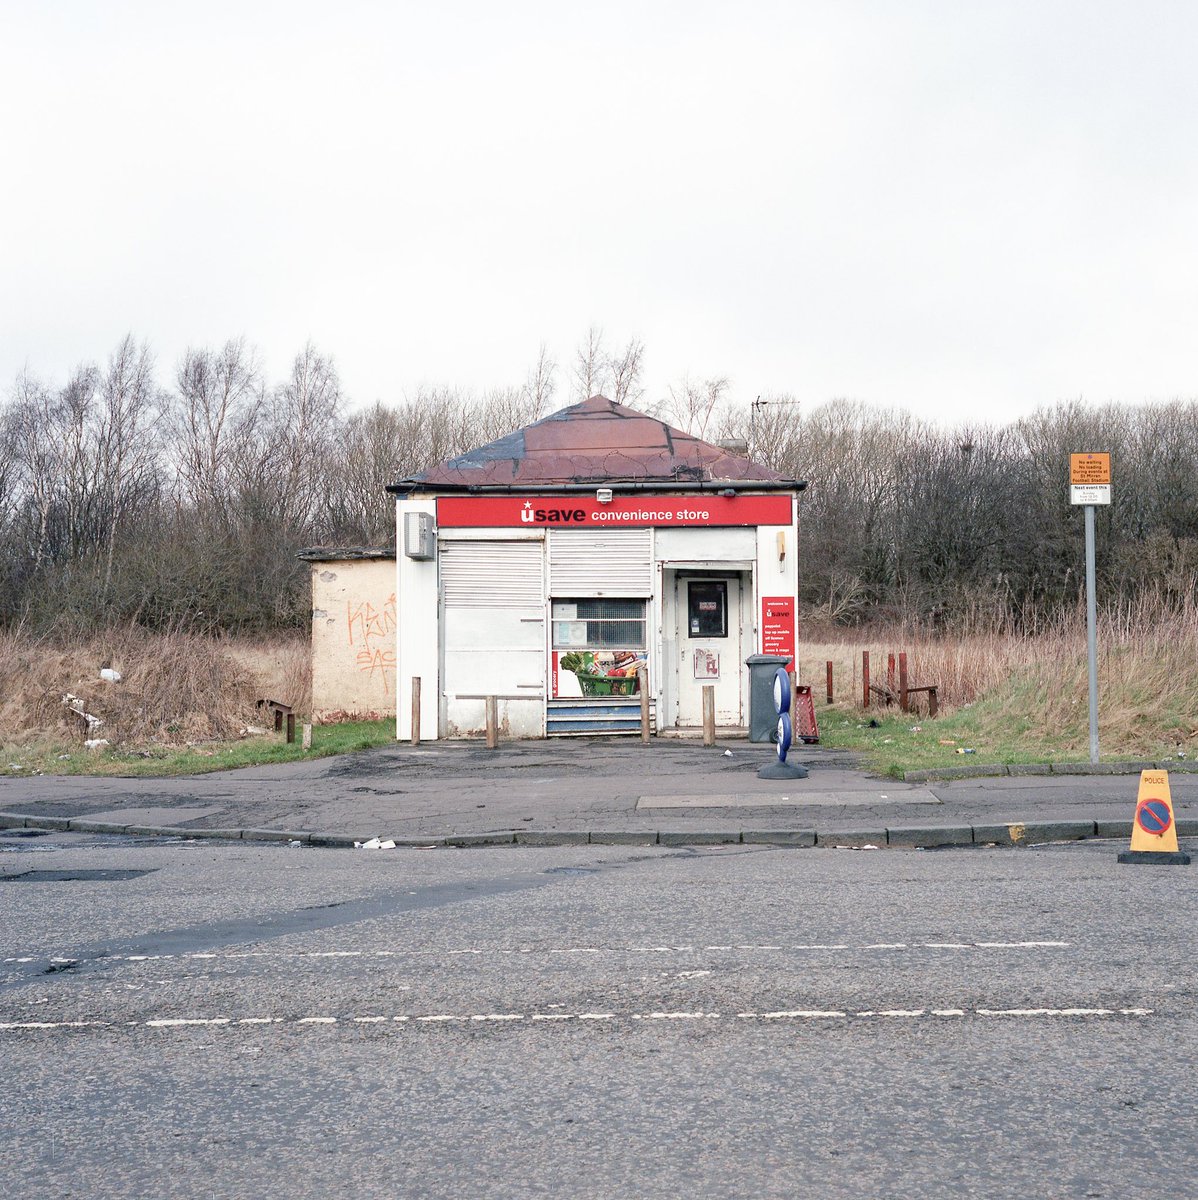 Convenience store, Paisley, Scotland, 2017.